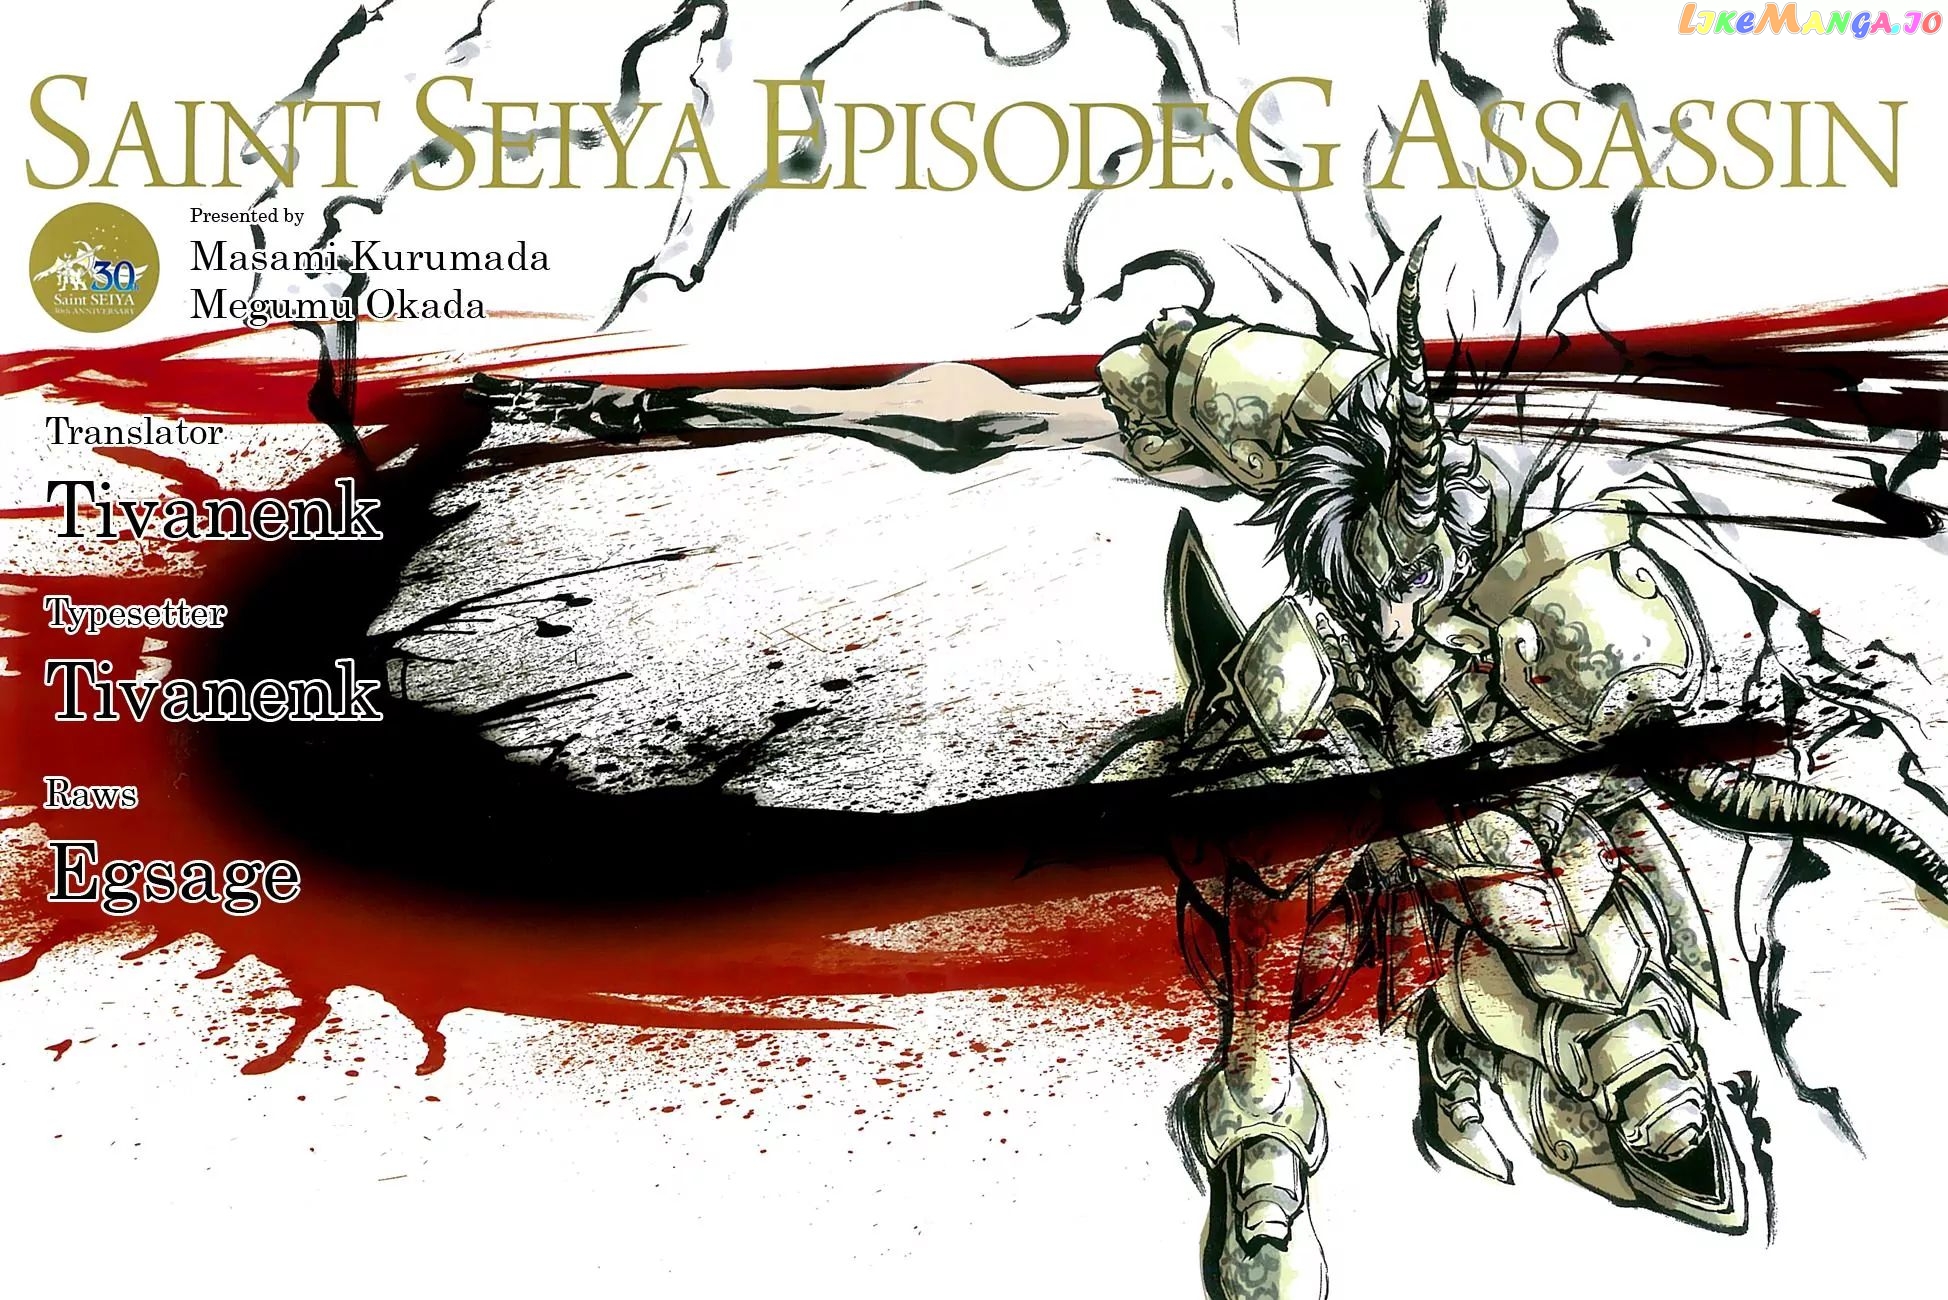 Saint Seiya Episode.g -Assassin- chapter 70 - page 1